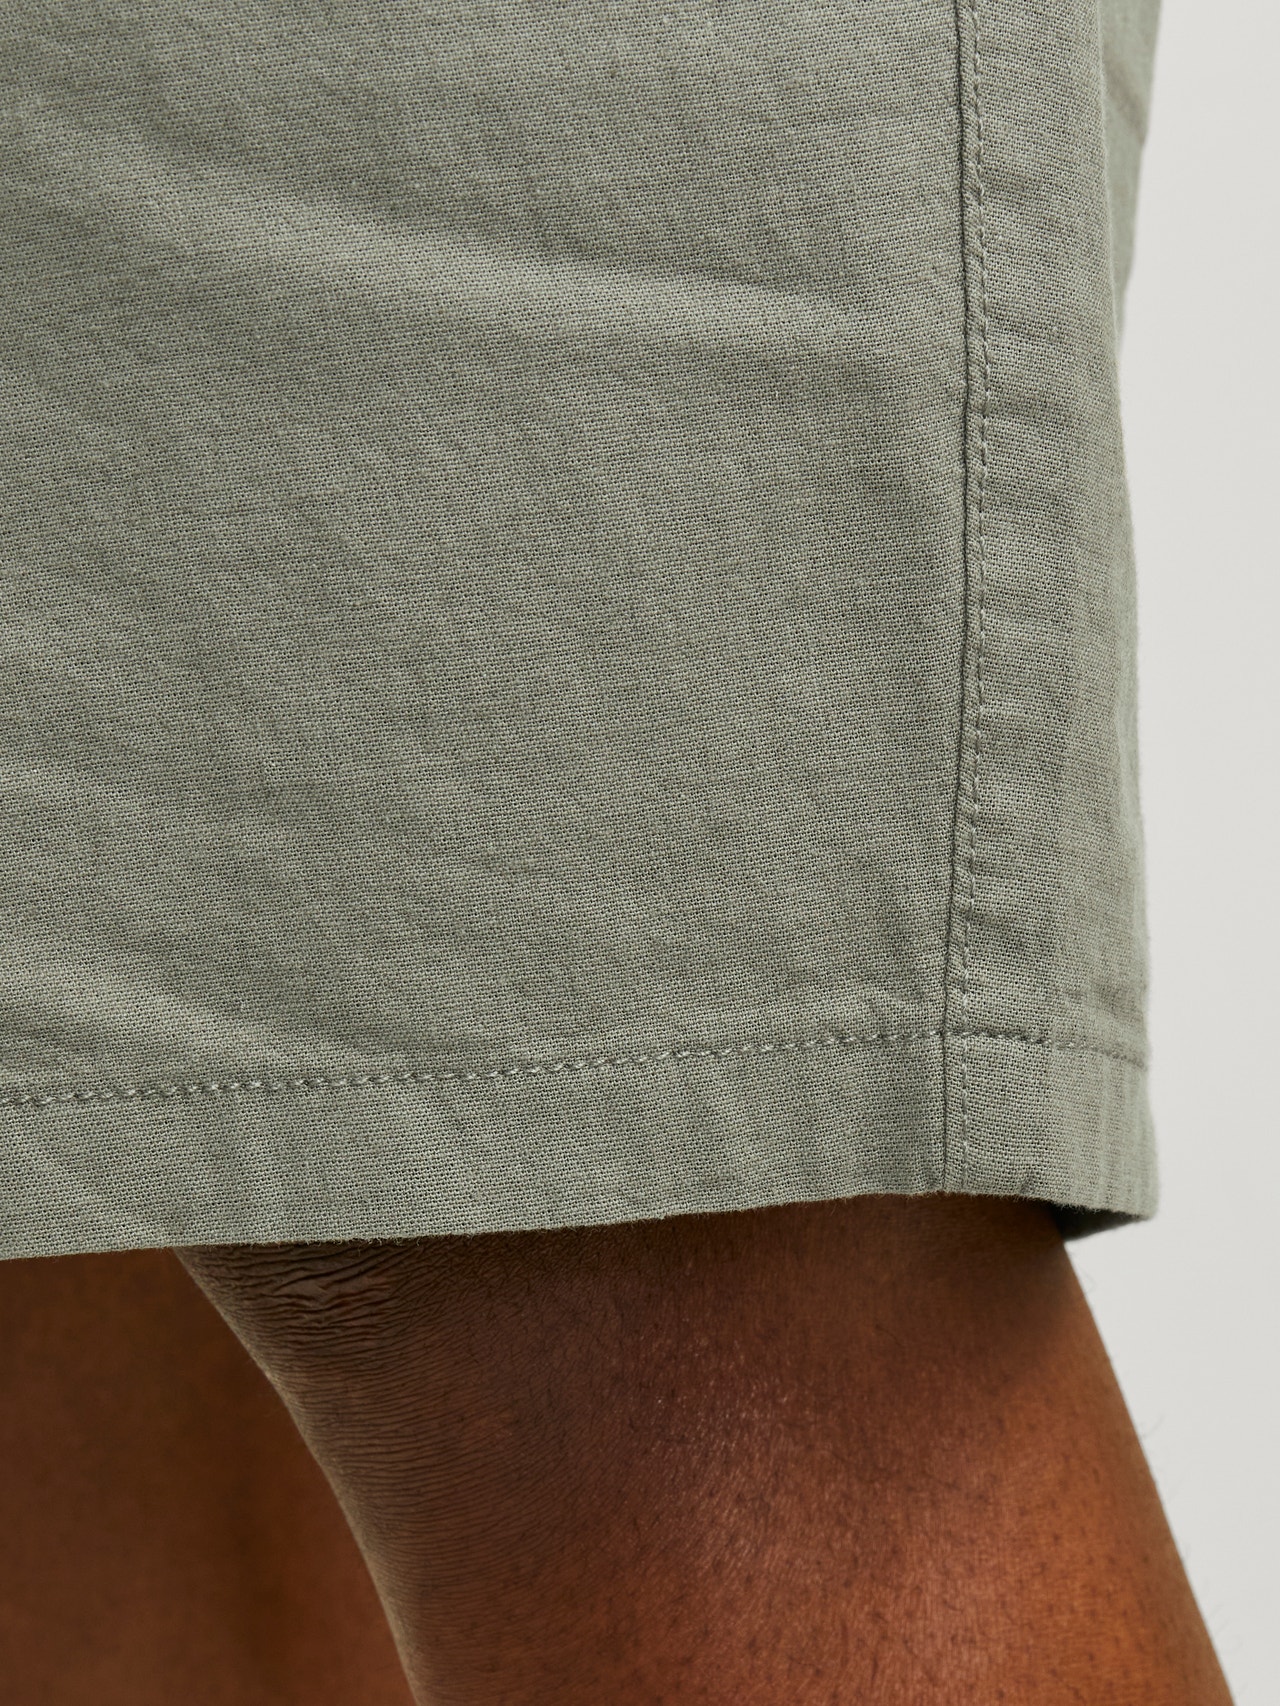 Jack & Jones Plus Size Regular Fit Chino shorts -Deep Lichen Green - 12235793